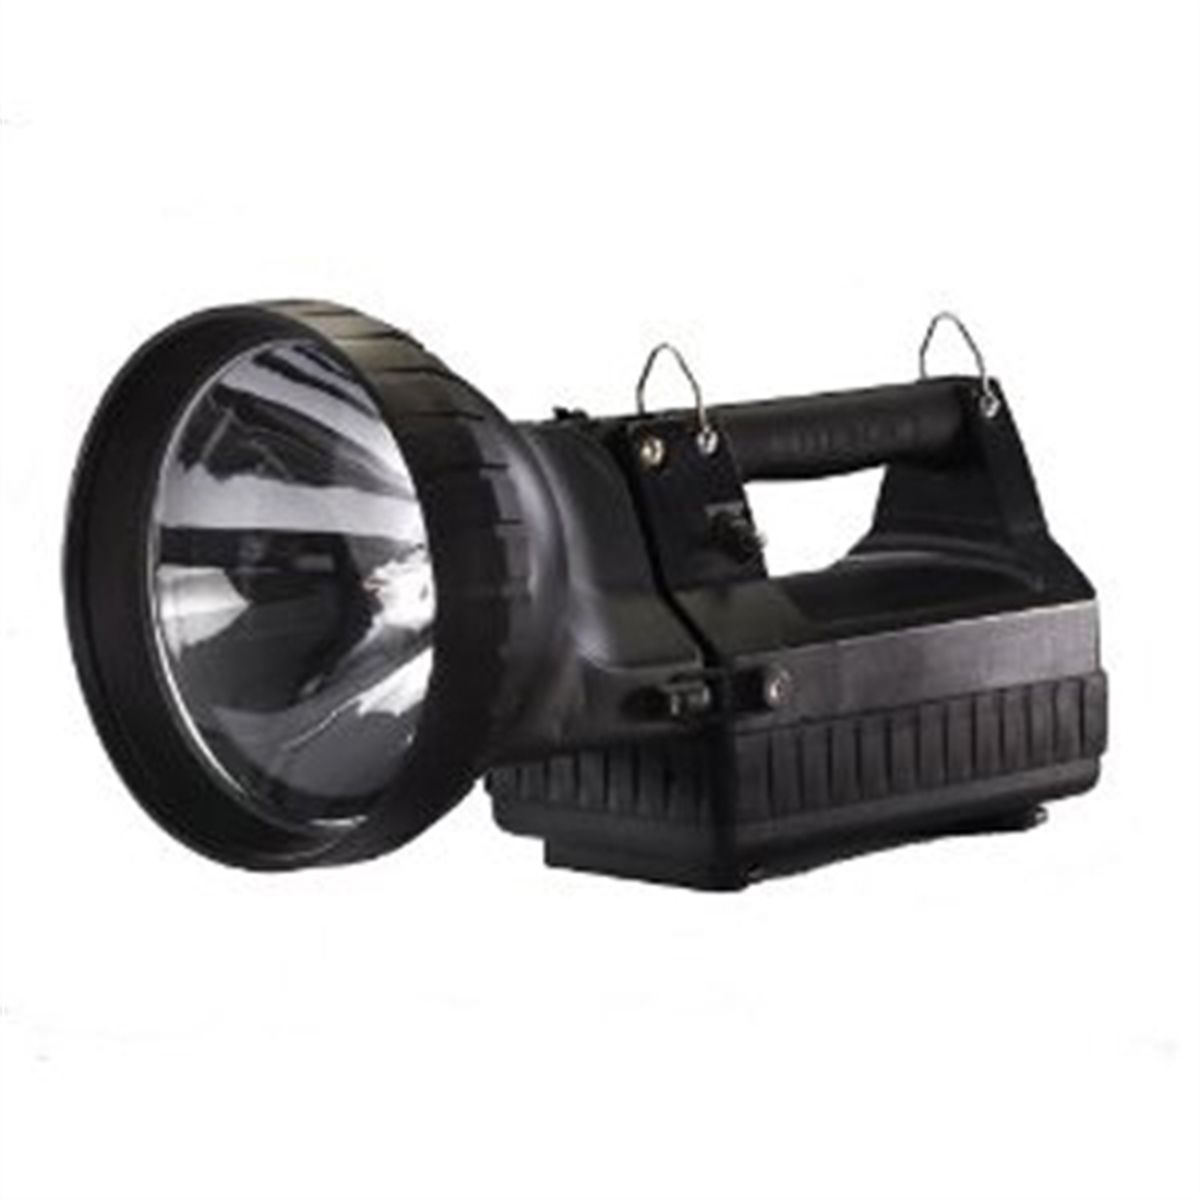 HID LiteBox Rechargeable Lantern Vehicle Mount System Black